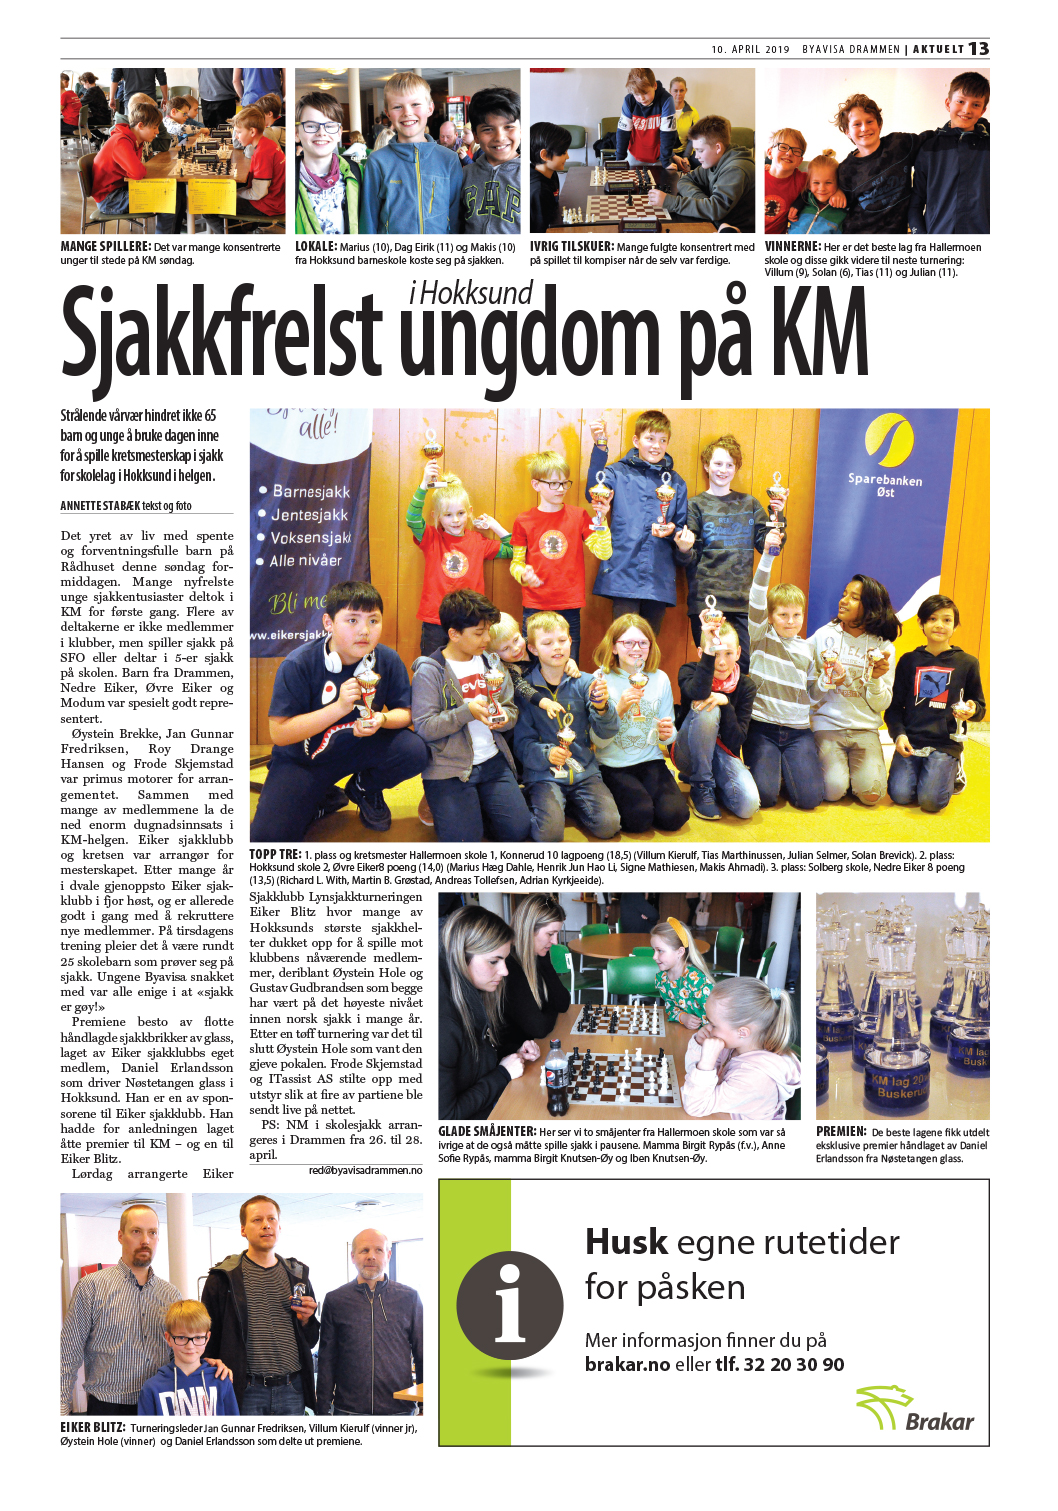 KM Skolelag Hokksund - Omtale Byavisa side 13 April 2019